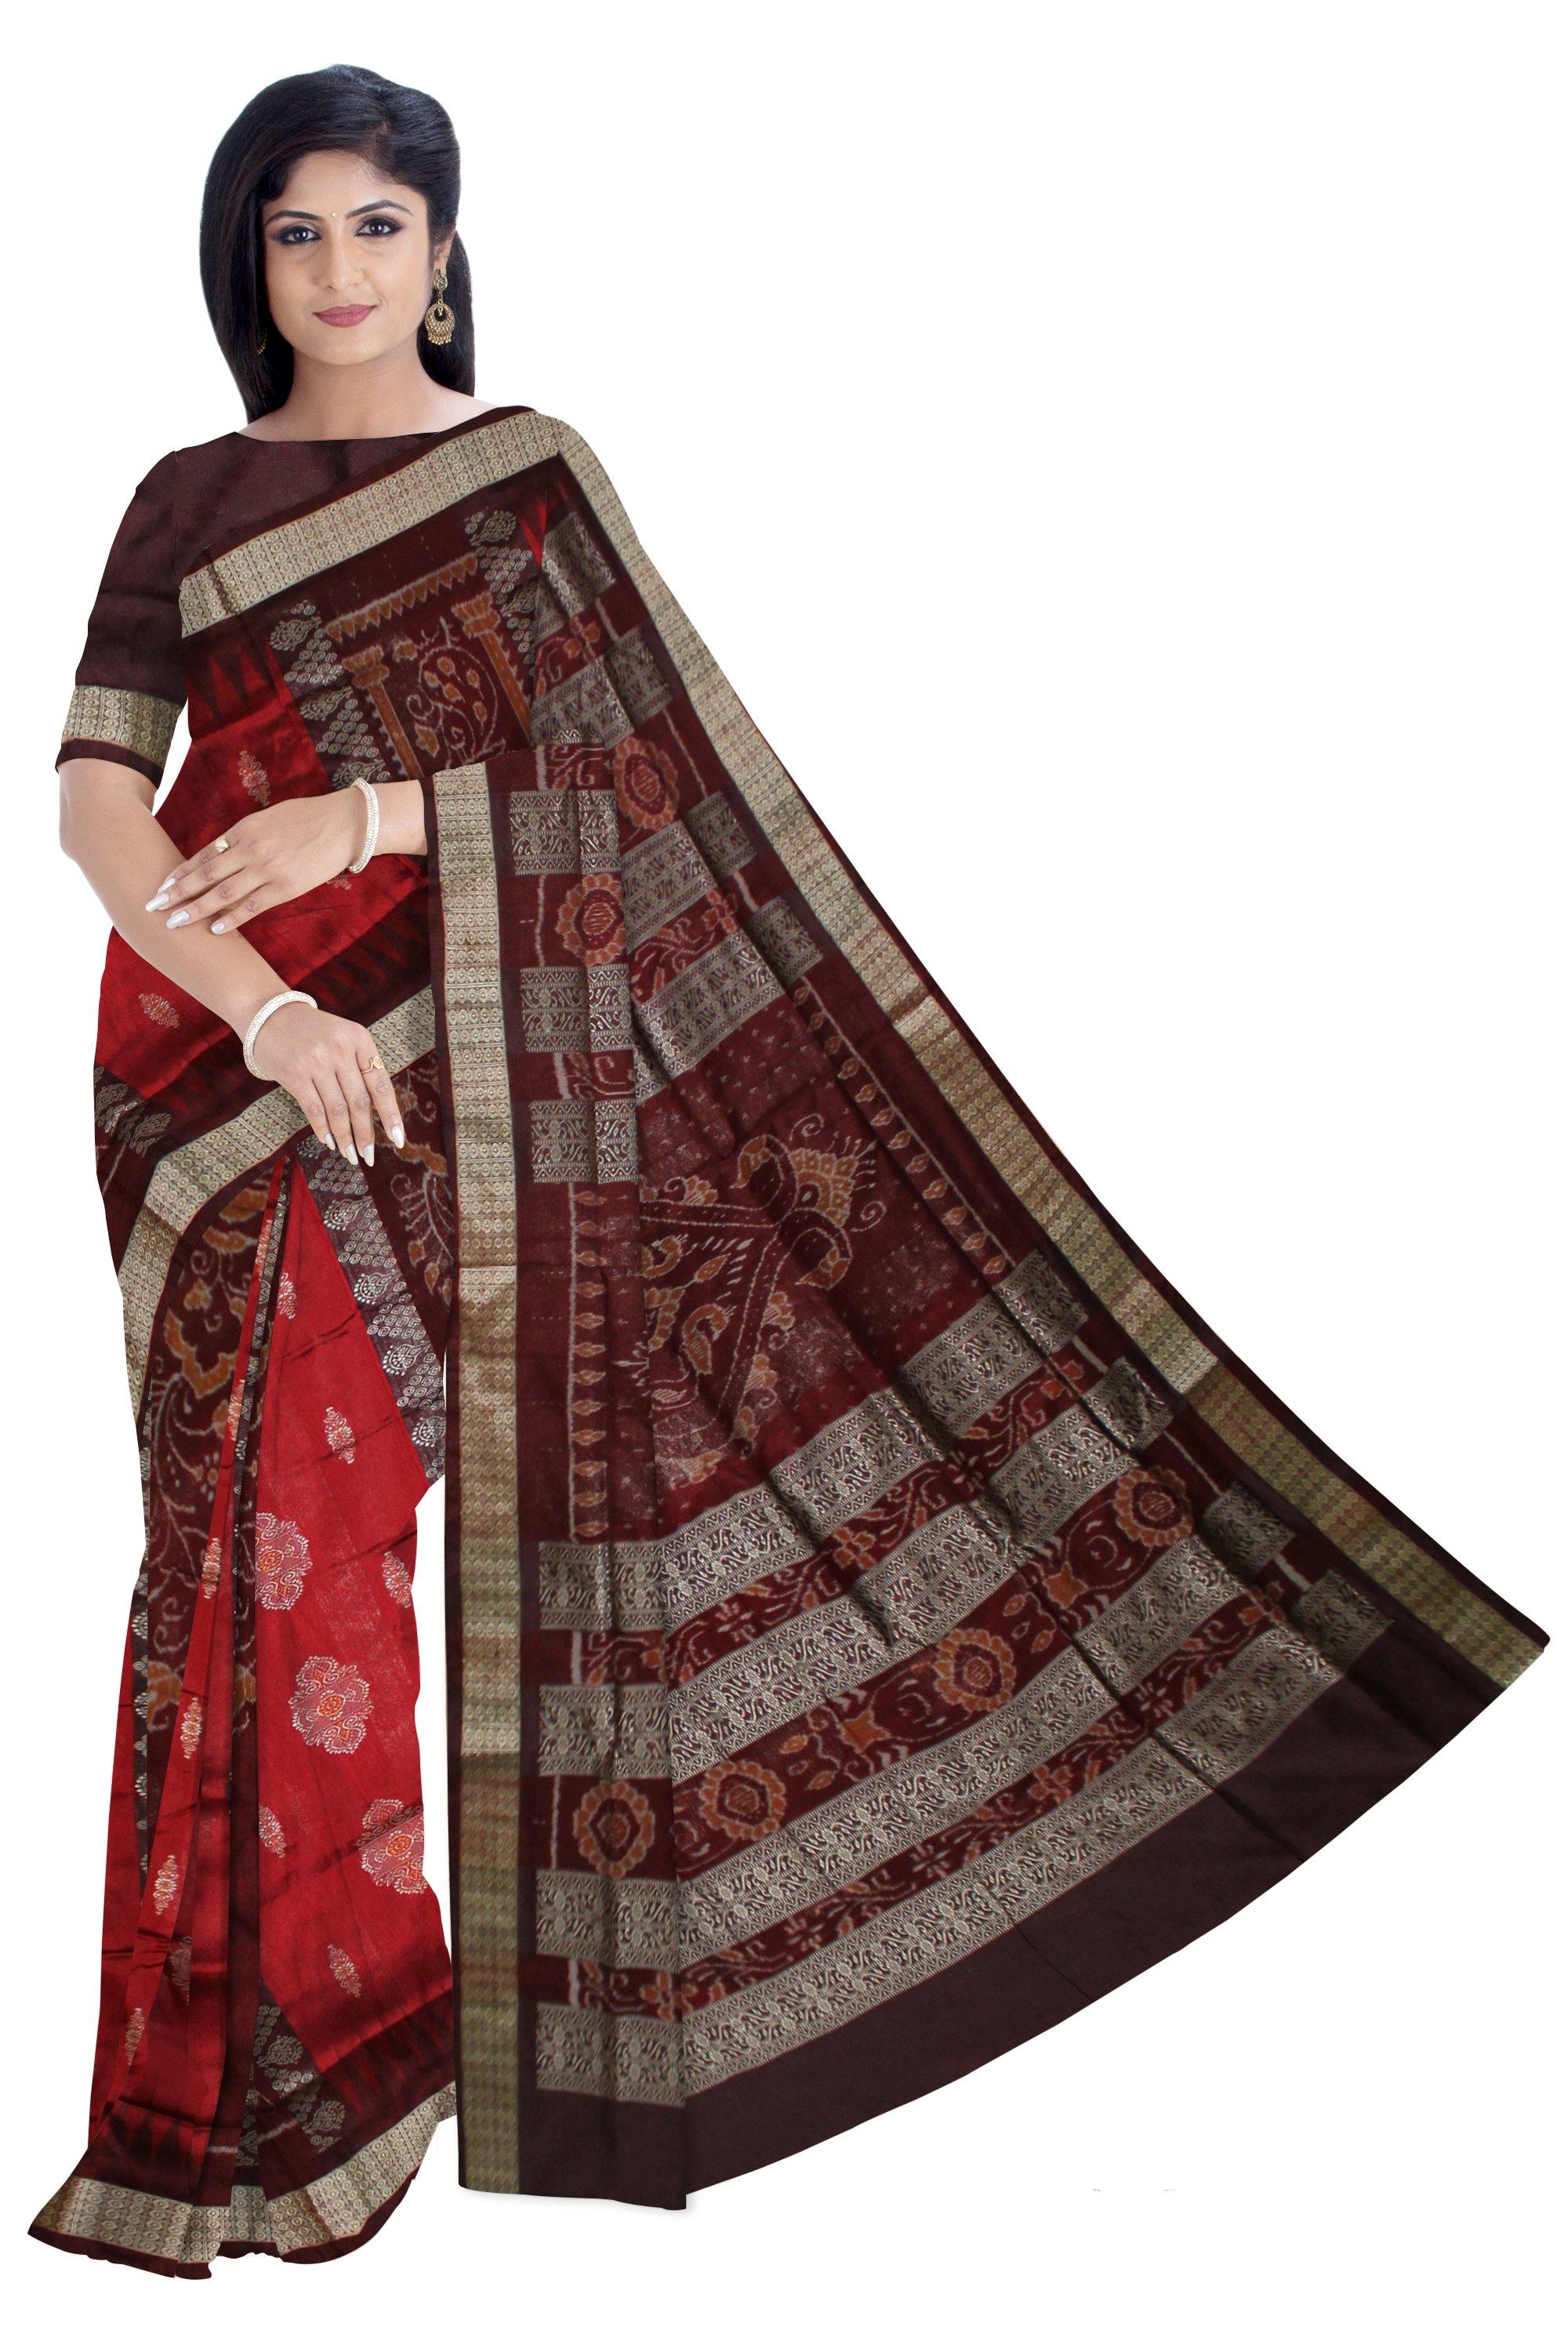 Sambalpuri Pata Saree in Red Color & Flower Bomkei with blouse Piece - Koshali Arts & Crafts Enterprise